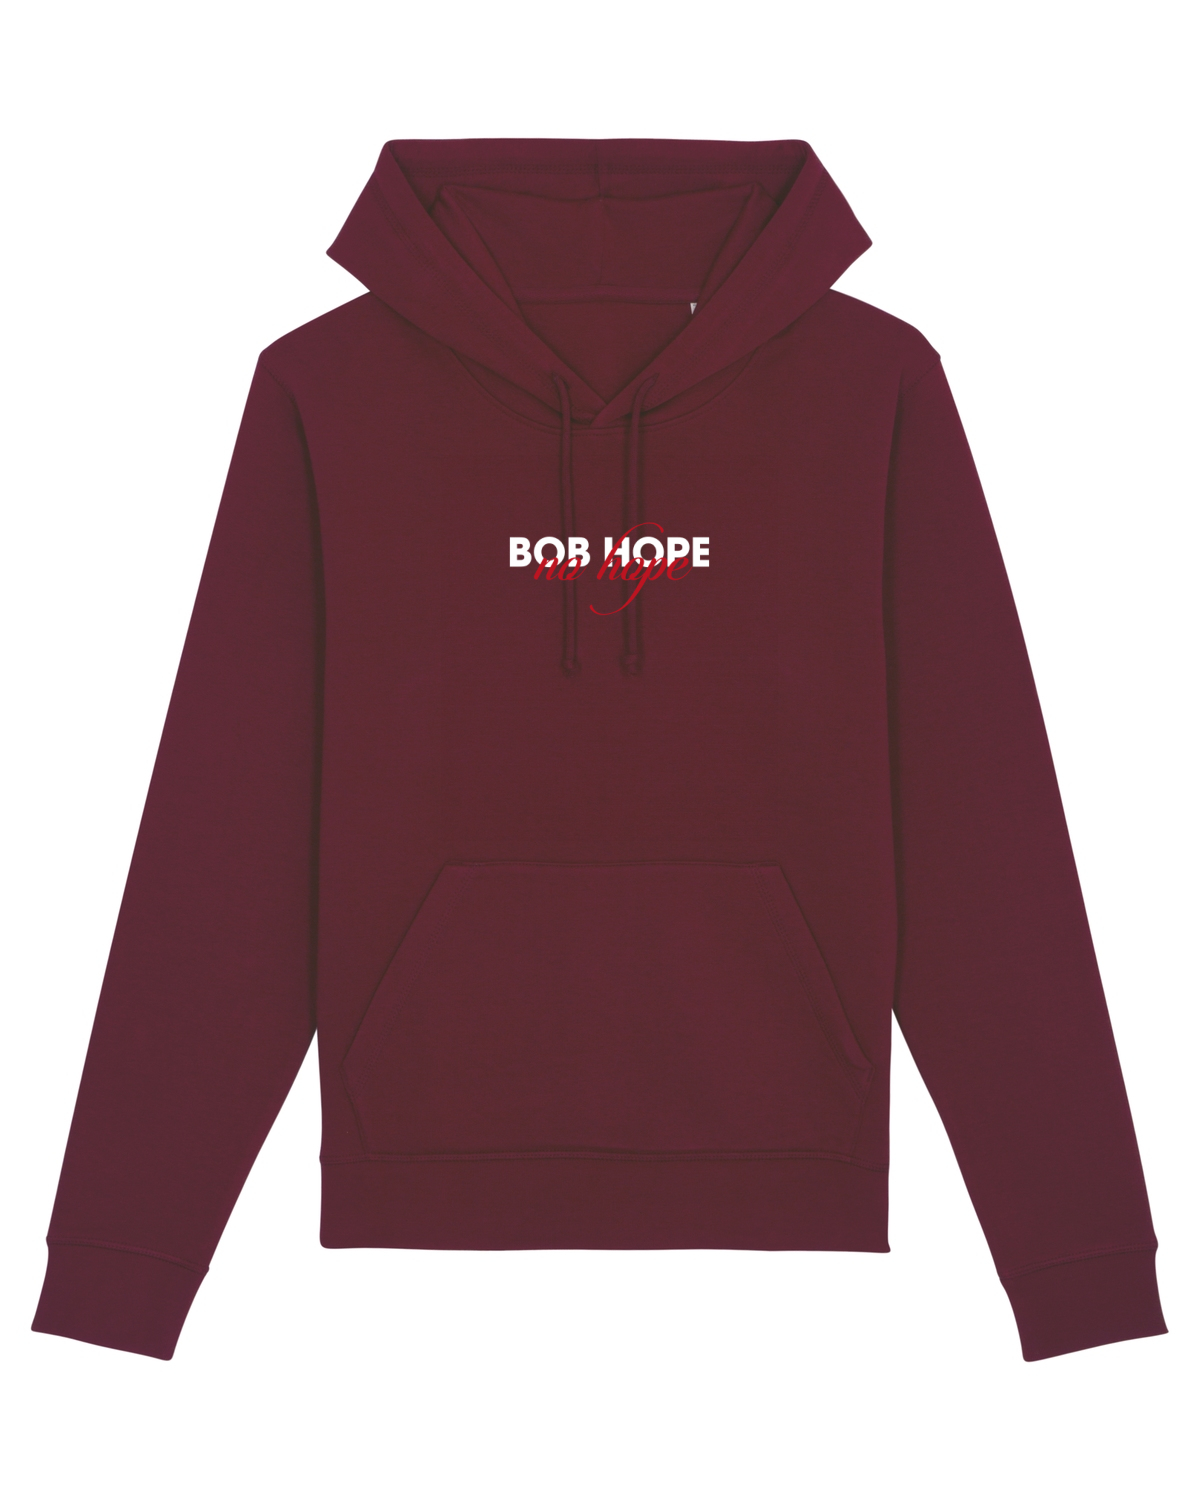 Bob Hope - no hope